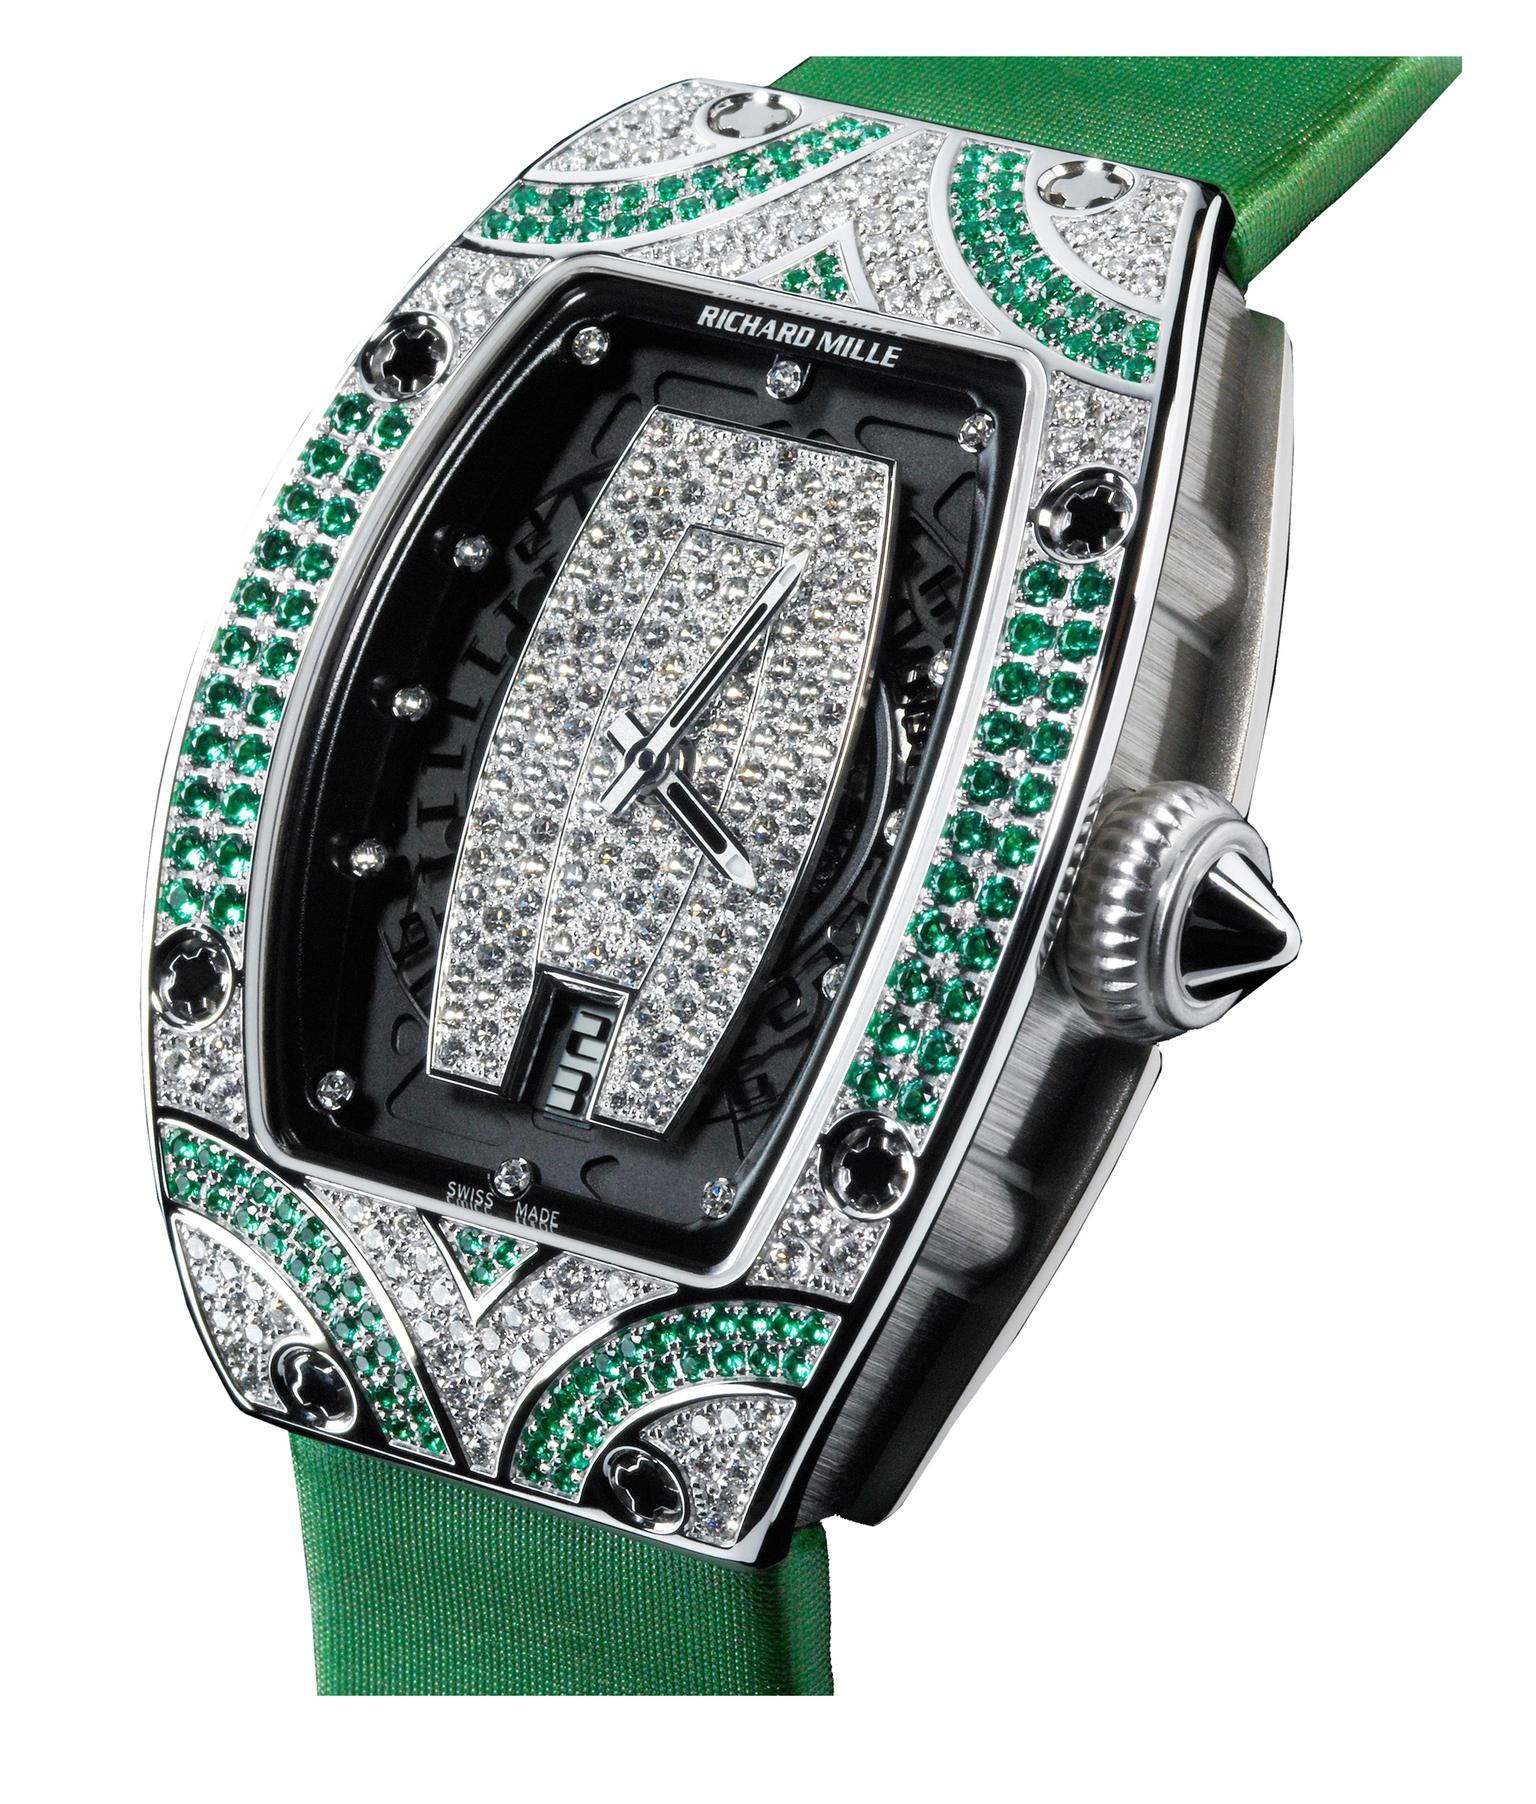 Richard Mille 007 emeralds and diamonds_20131017_Zoom